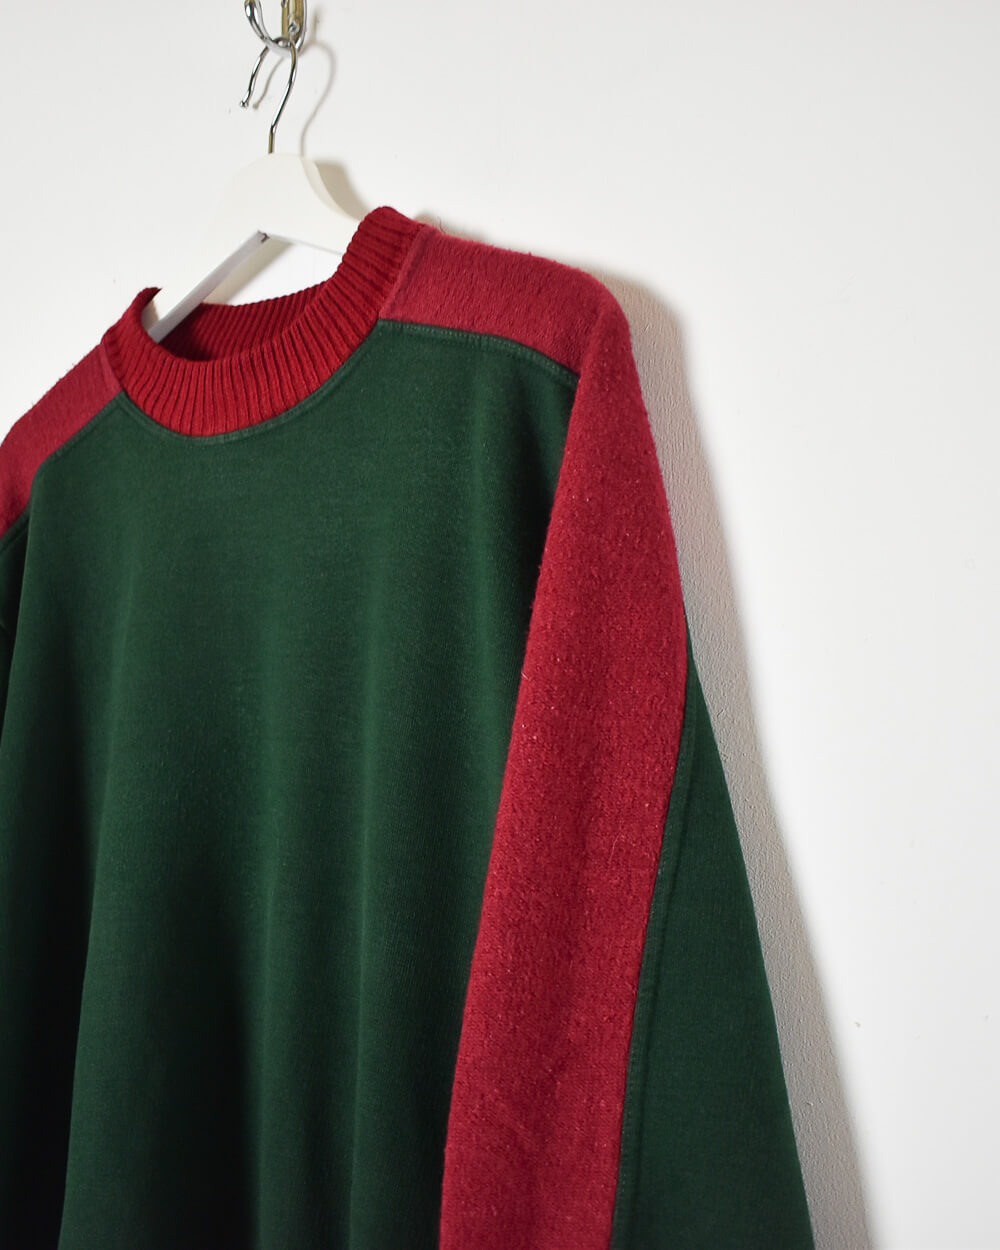 Green Vintage Colour Block Sweatshirt - Medium